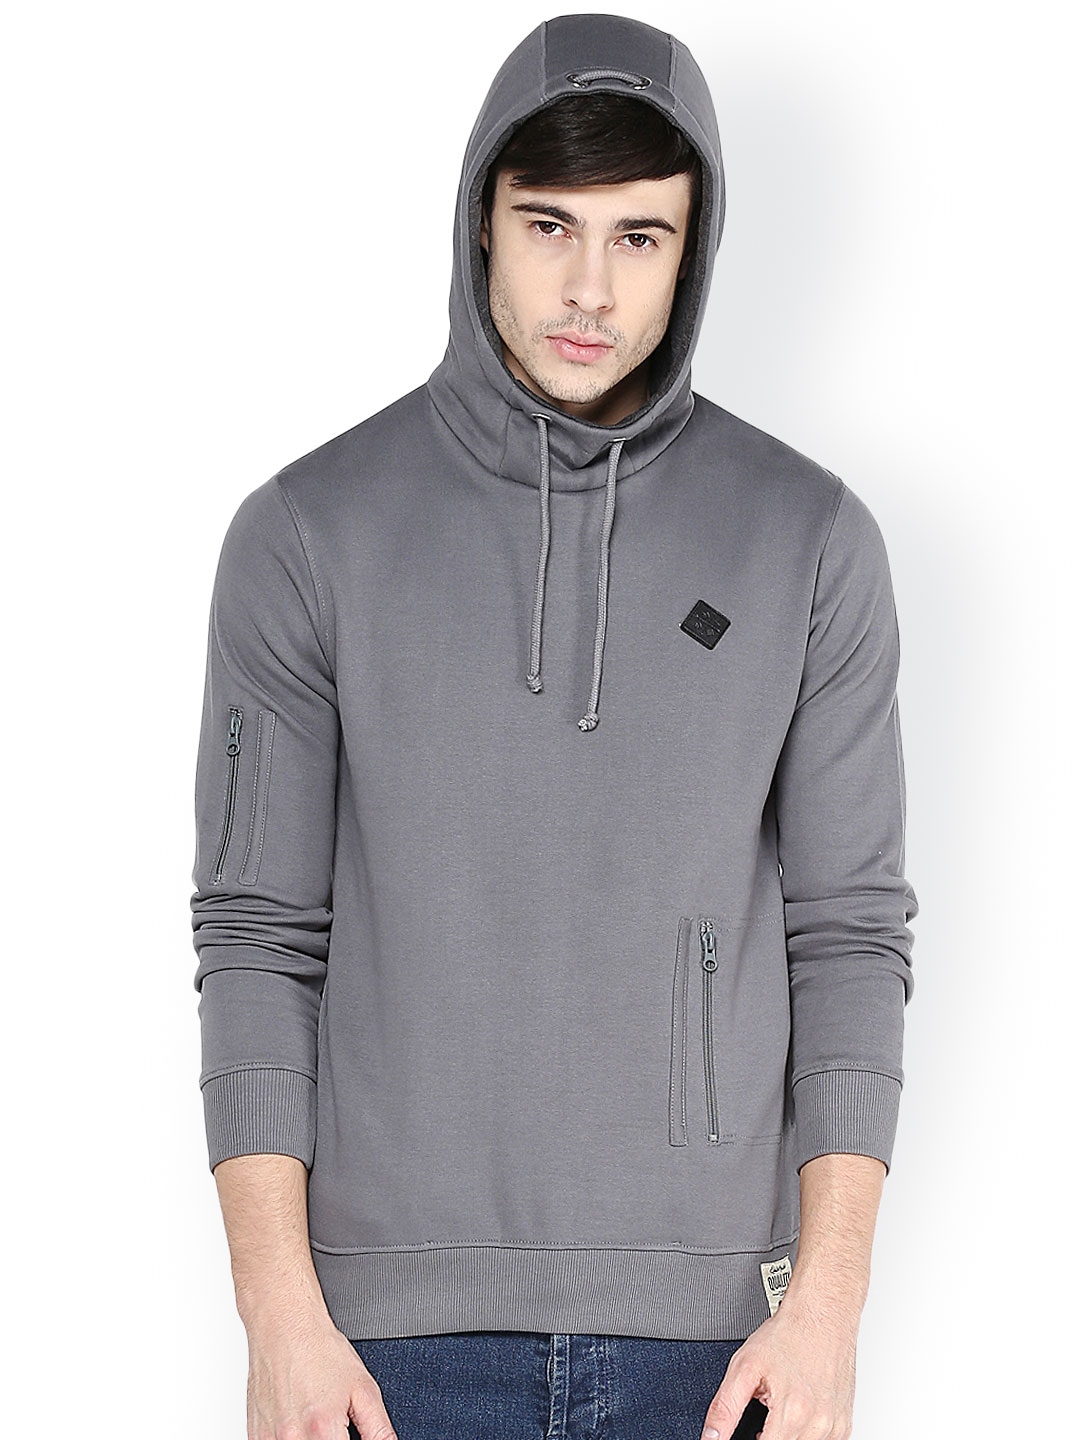 Buy ELABORADO Grey Hooded Sweatshirt - Sweatshirts for Men 1689006 | Myntra